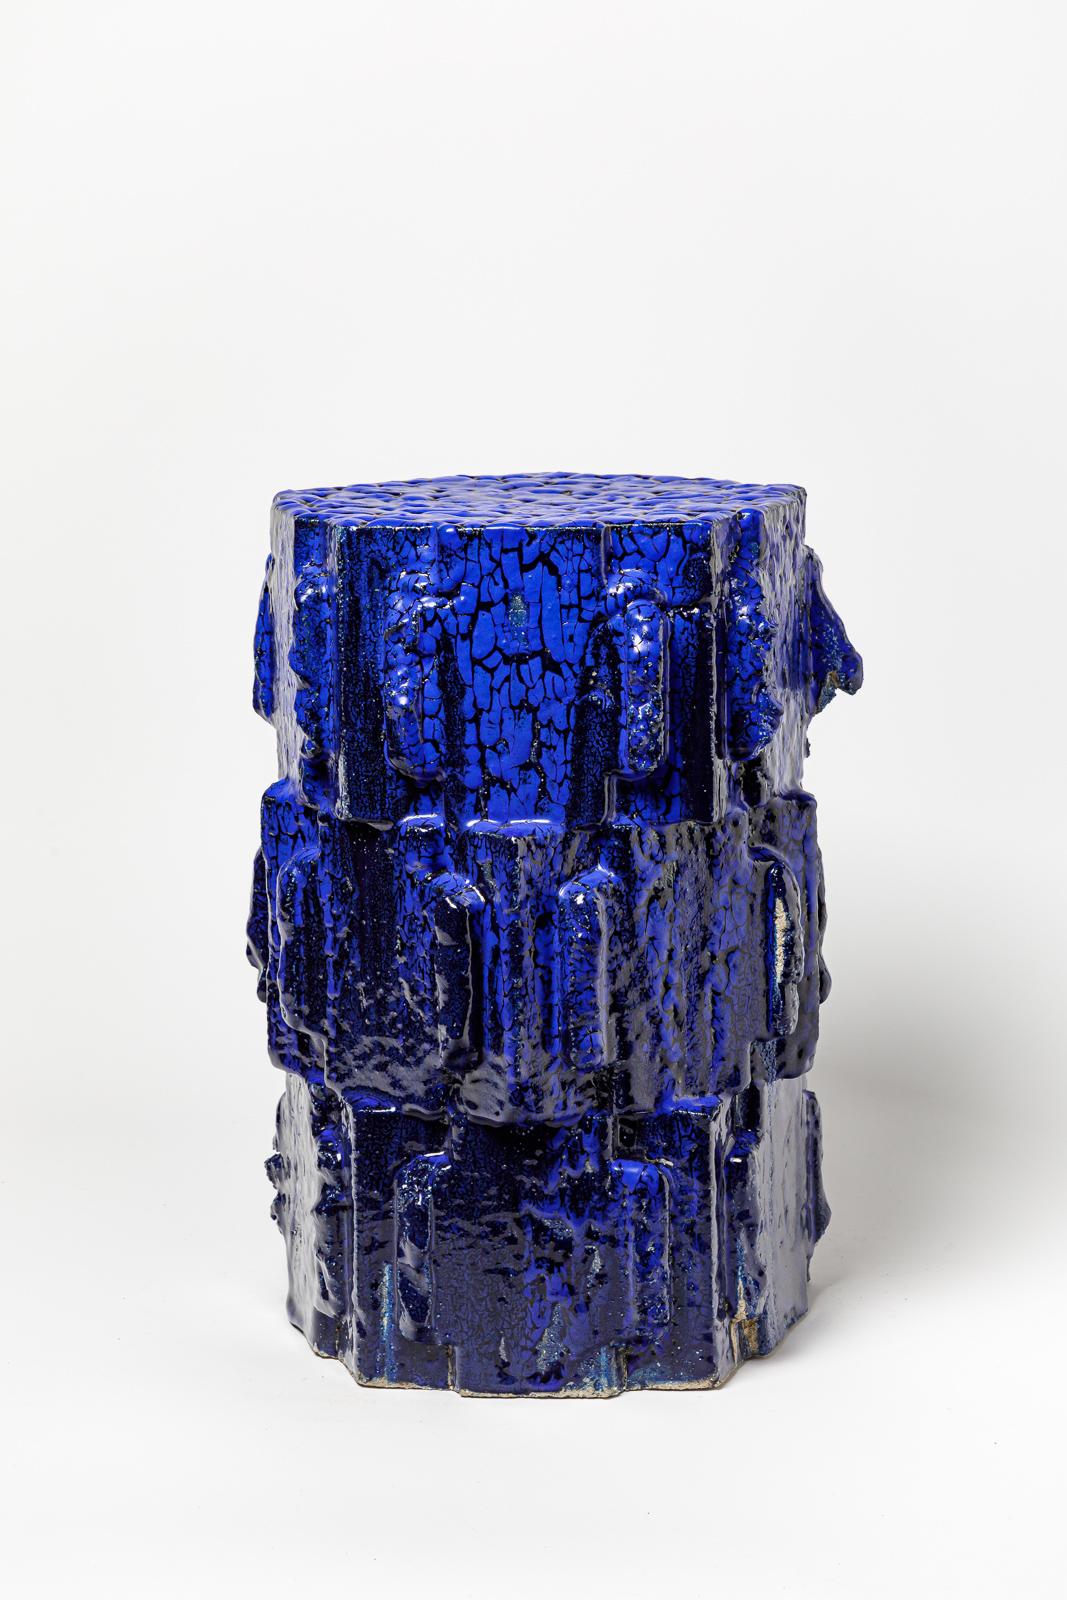 Blue glazed bollène stoneware stool by Jean Ponsart.
Artist monogram at the base. 2023.
H : 17.5’ x 11.2’ x 11.2 inches.